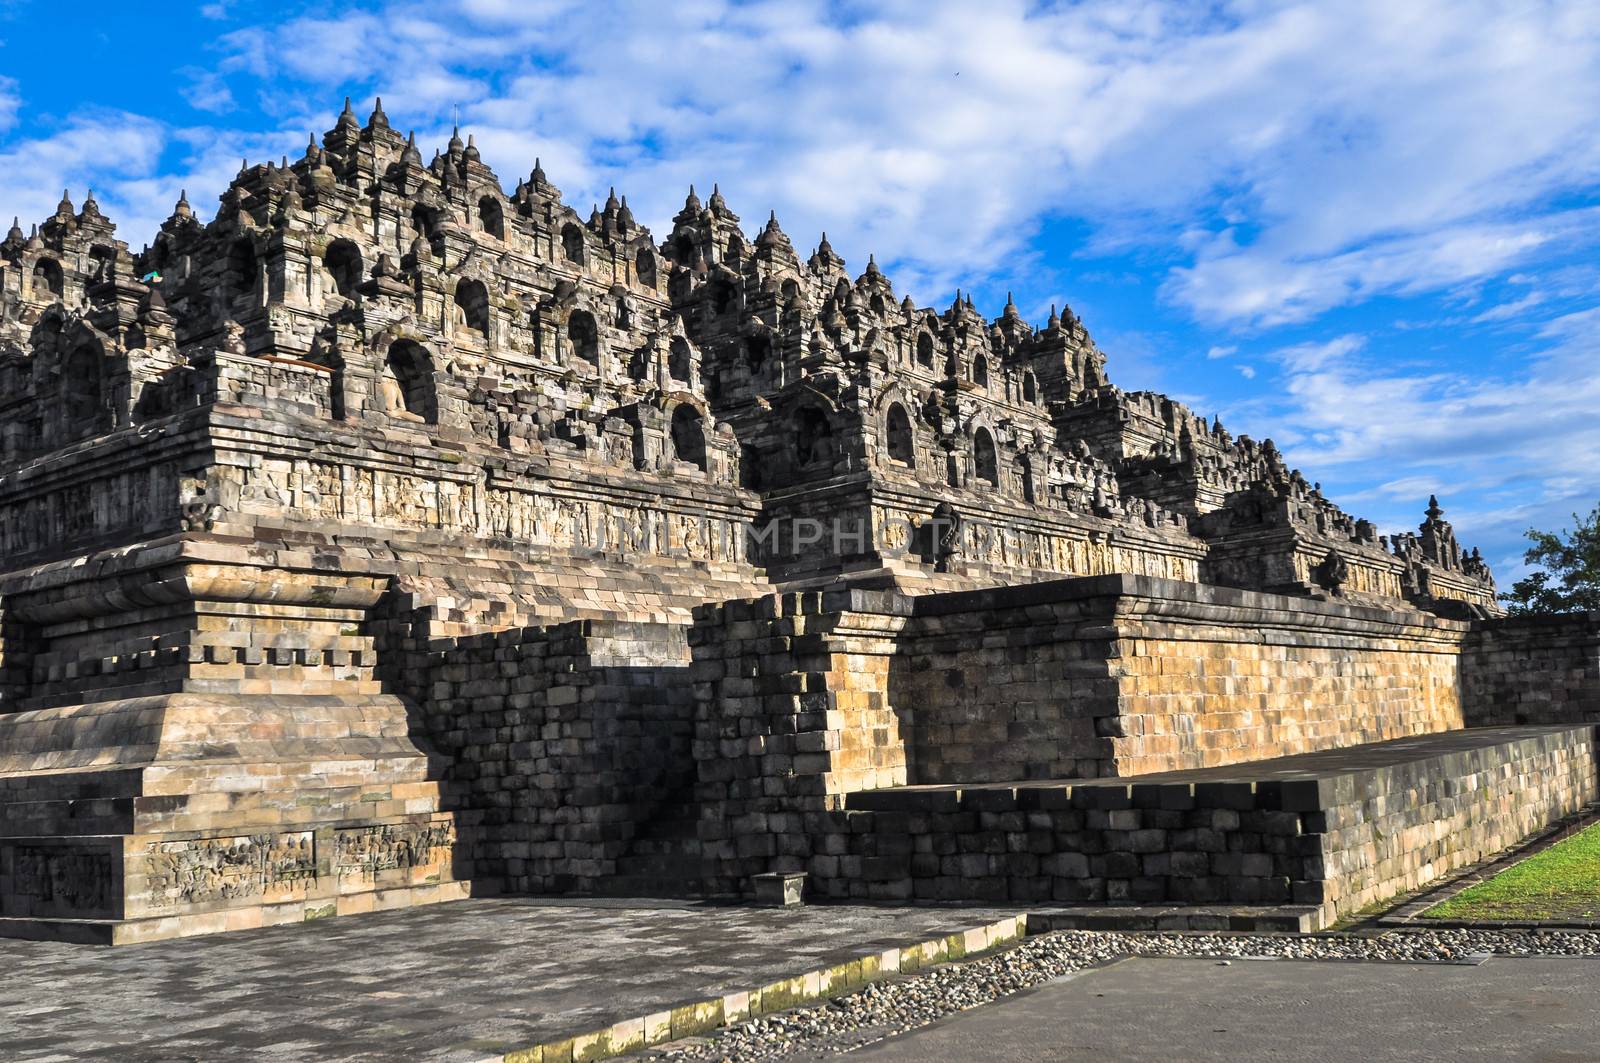 Borobudur complex in Yogjakarta in Java by weltreisendertj